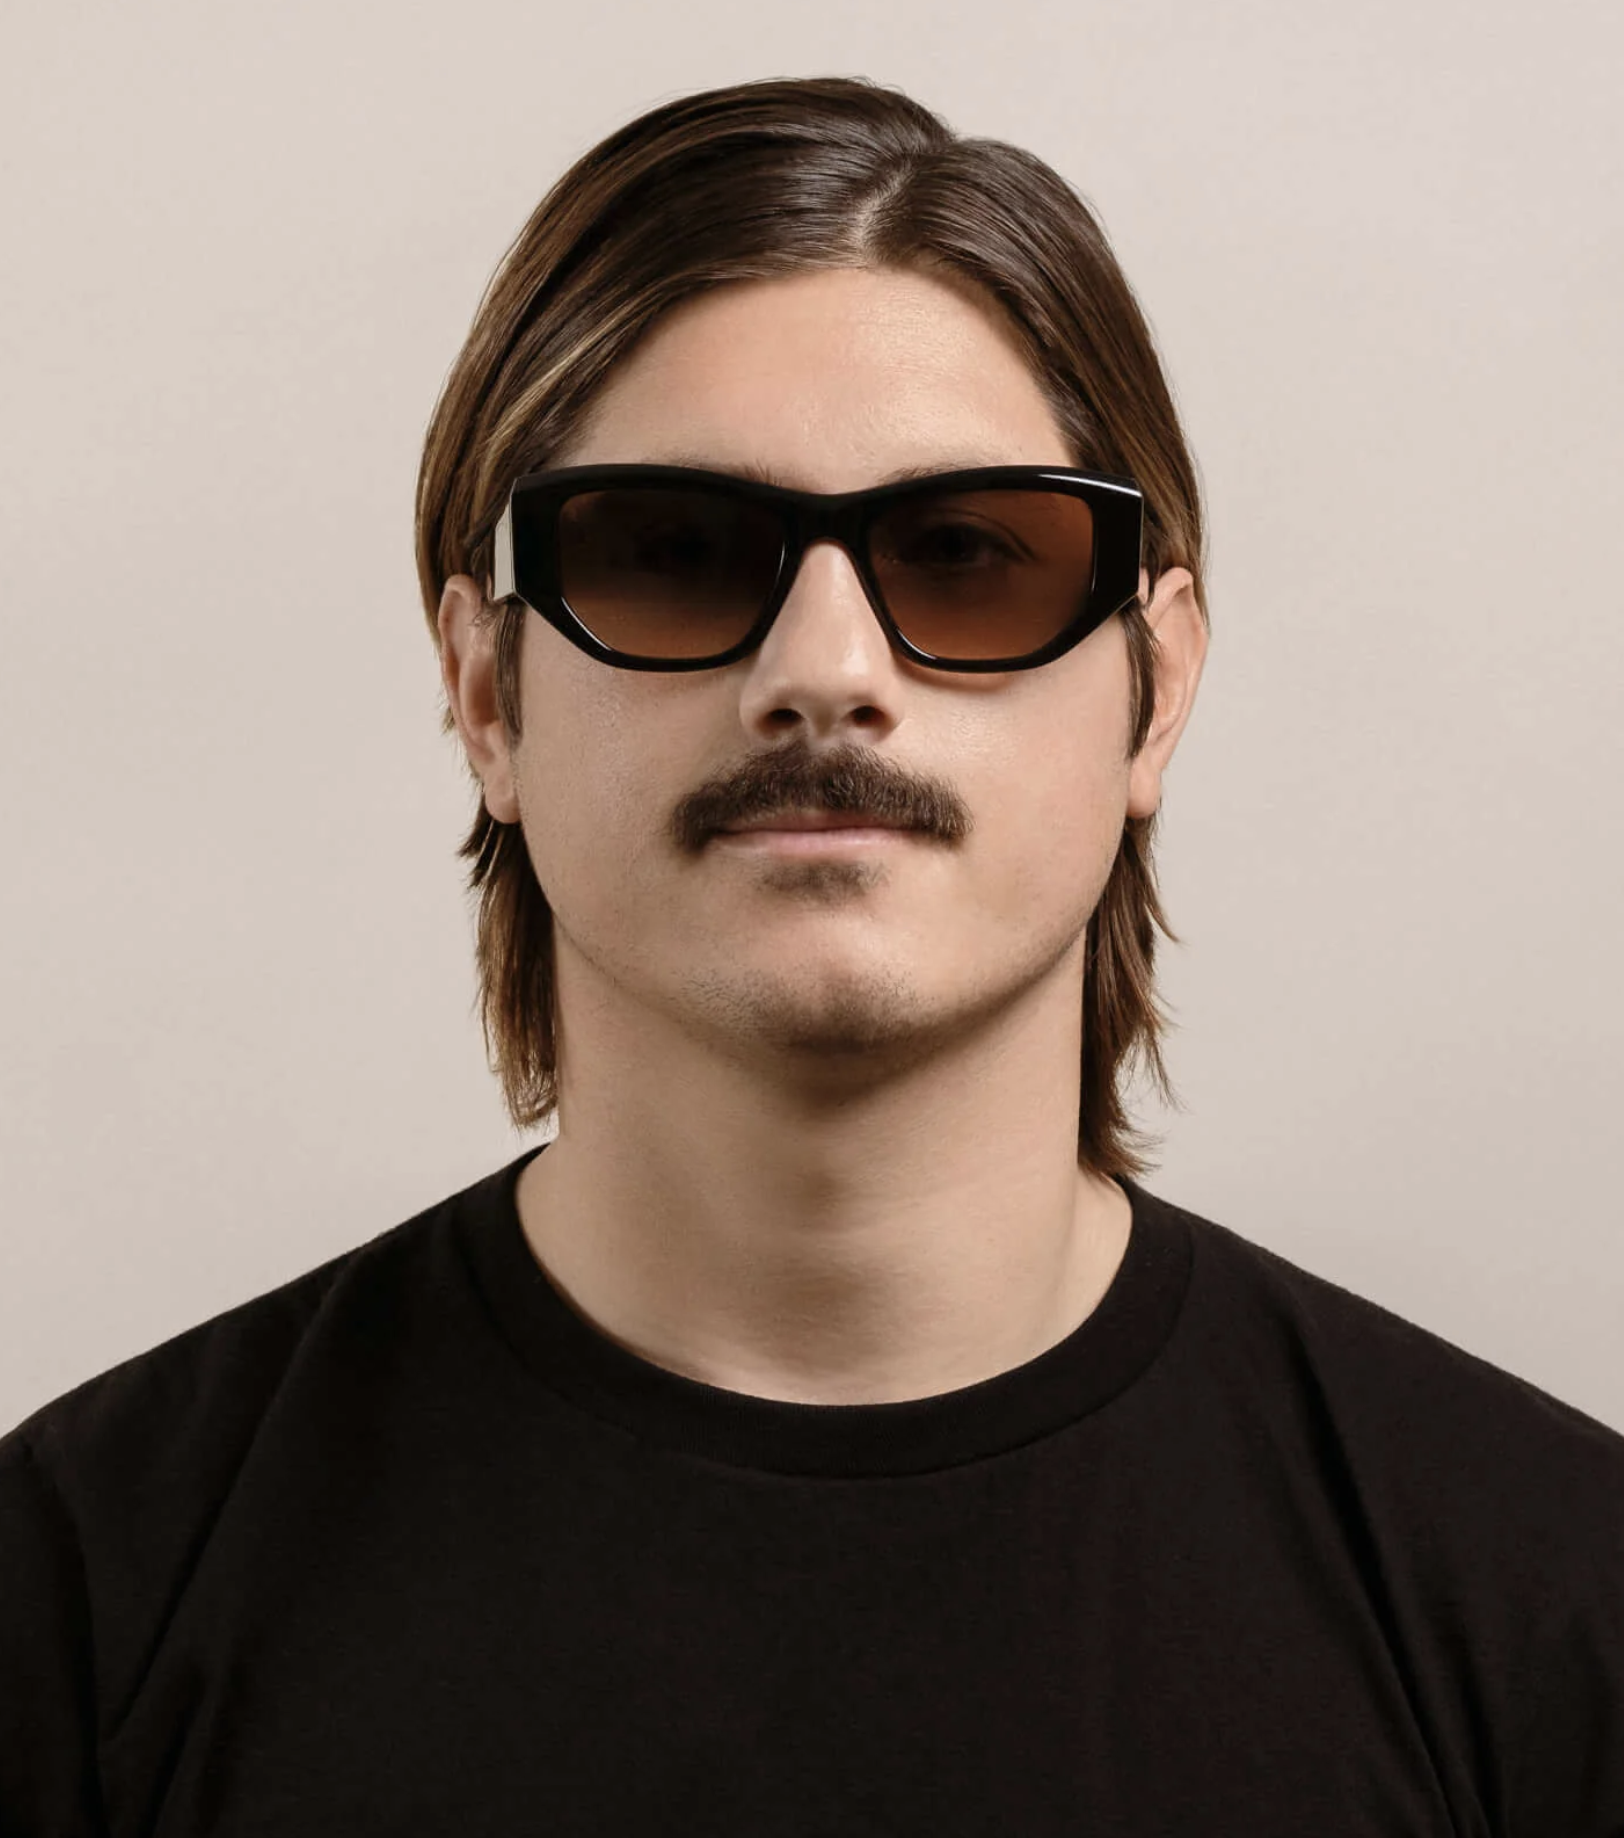 Ynez Sunglasses - Recycled Black/Reposado Gradient